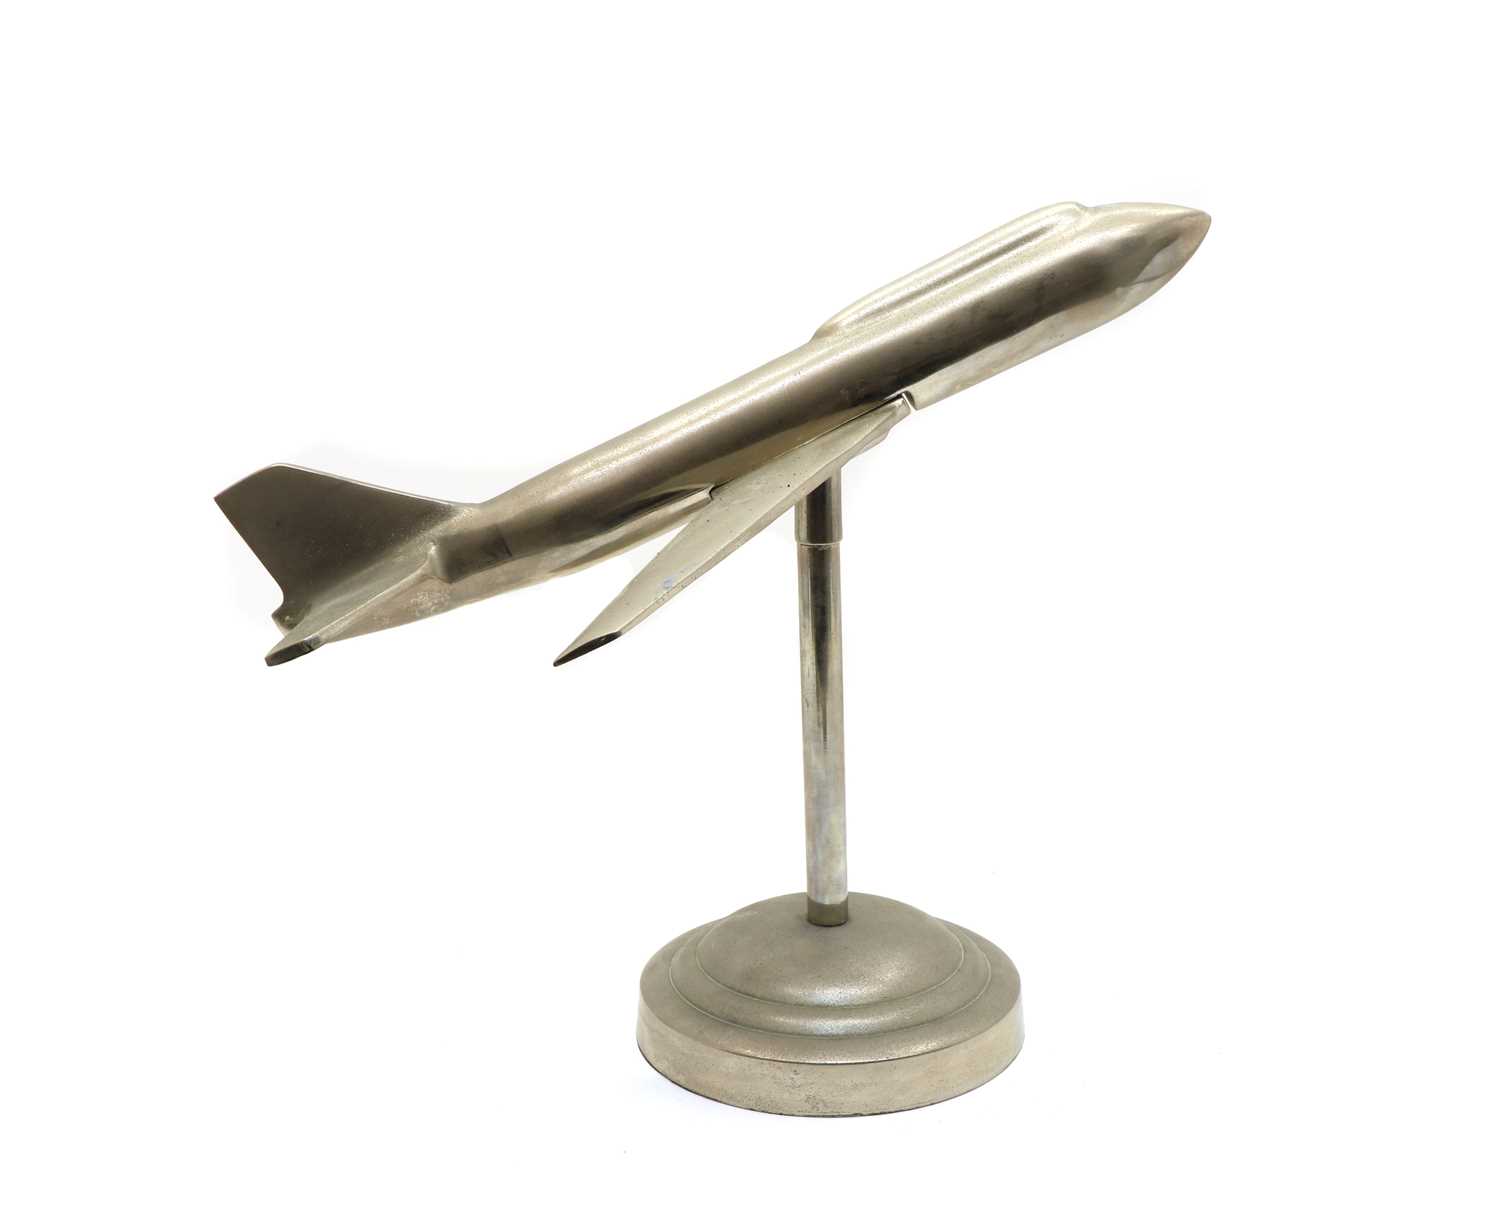 Lot 60 - An Art Deco style chrome model of an aeroplane